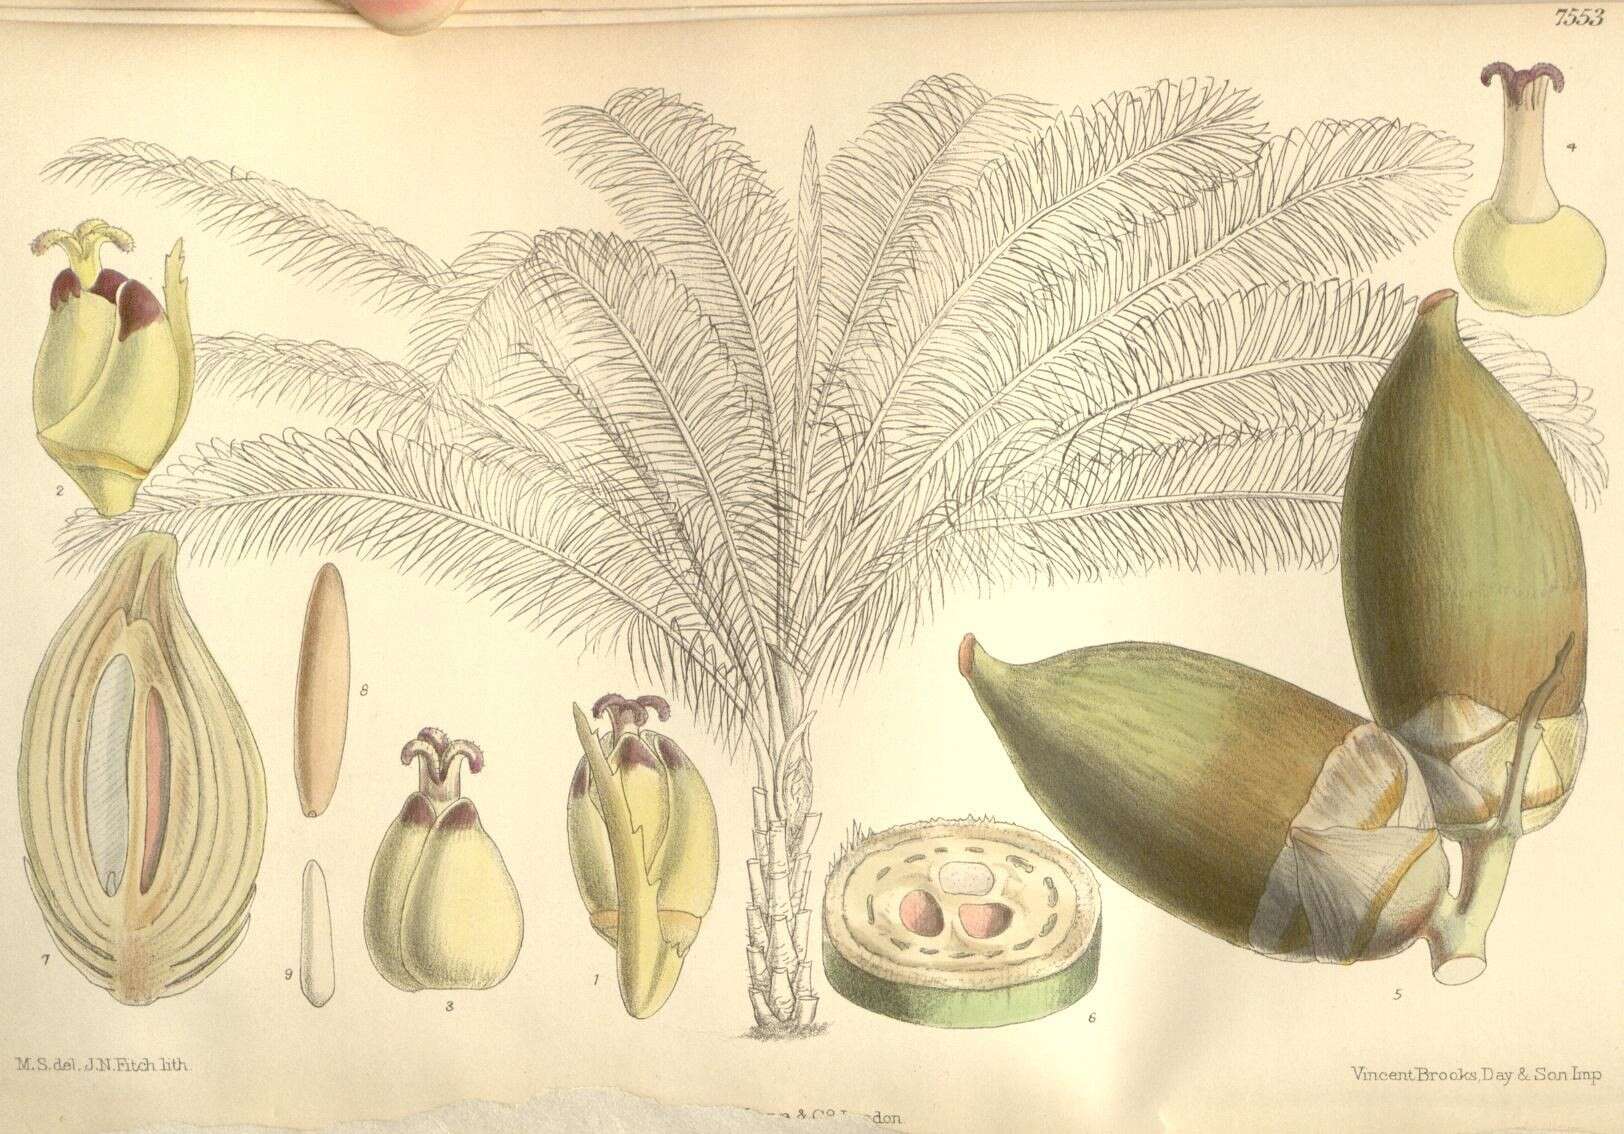 Image of attalea palm